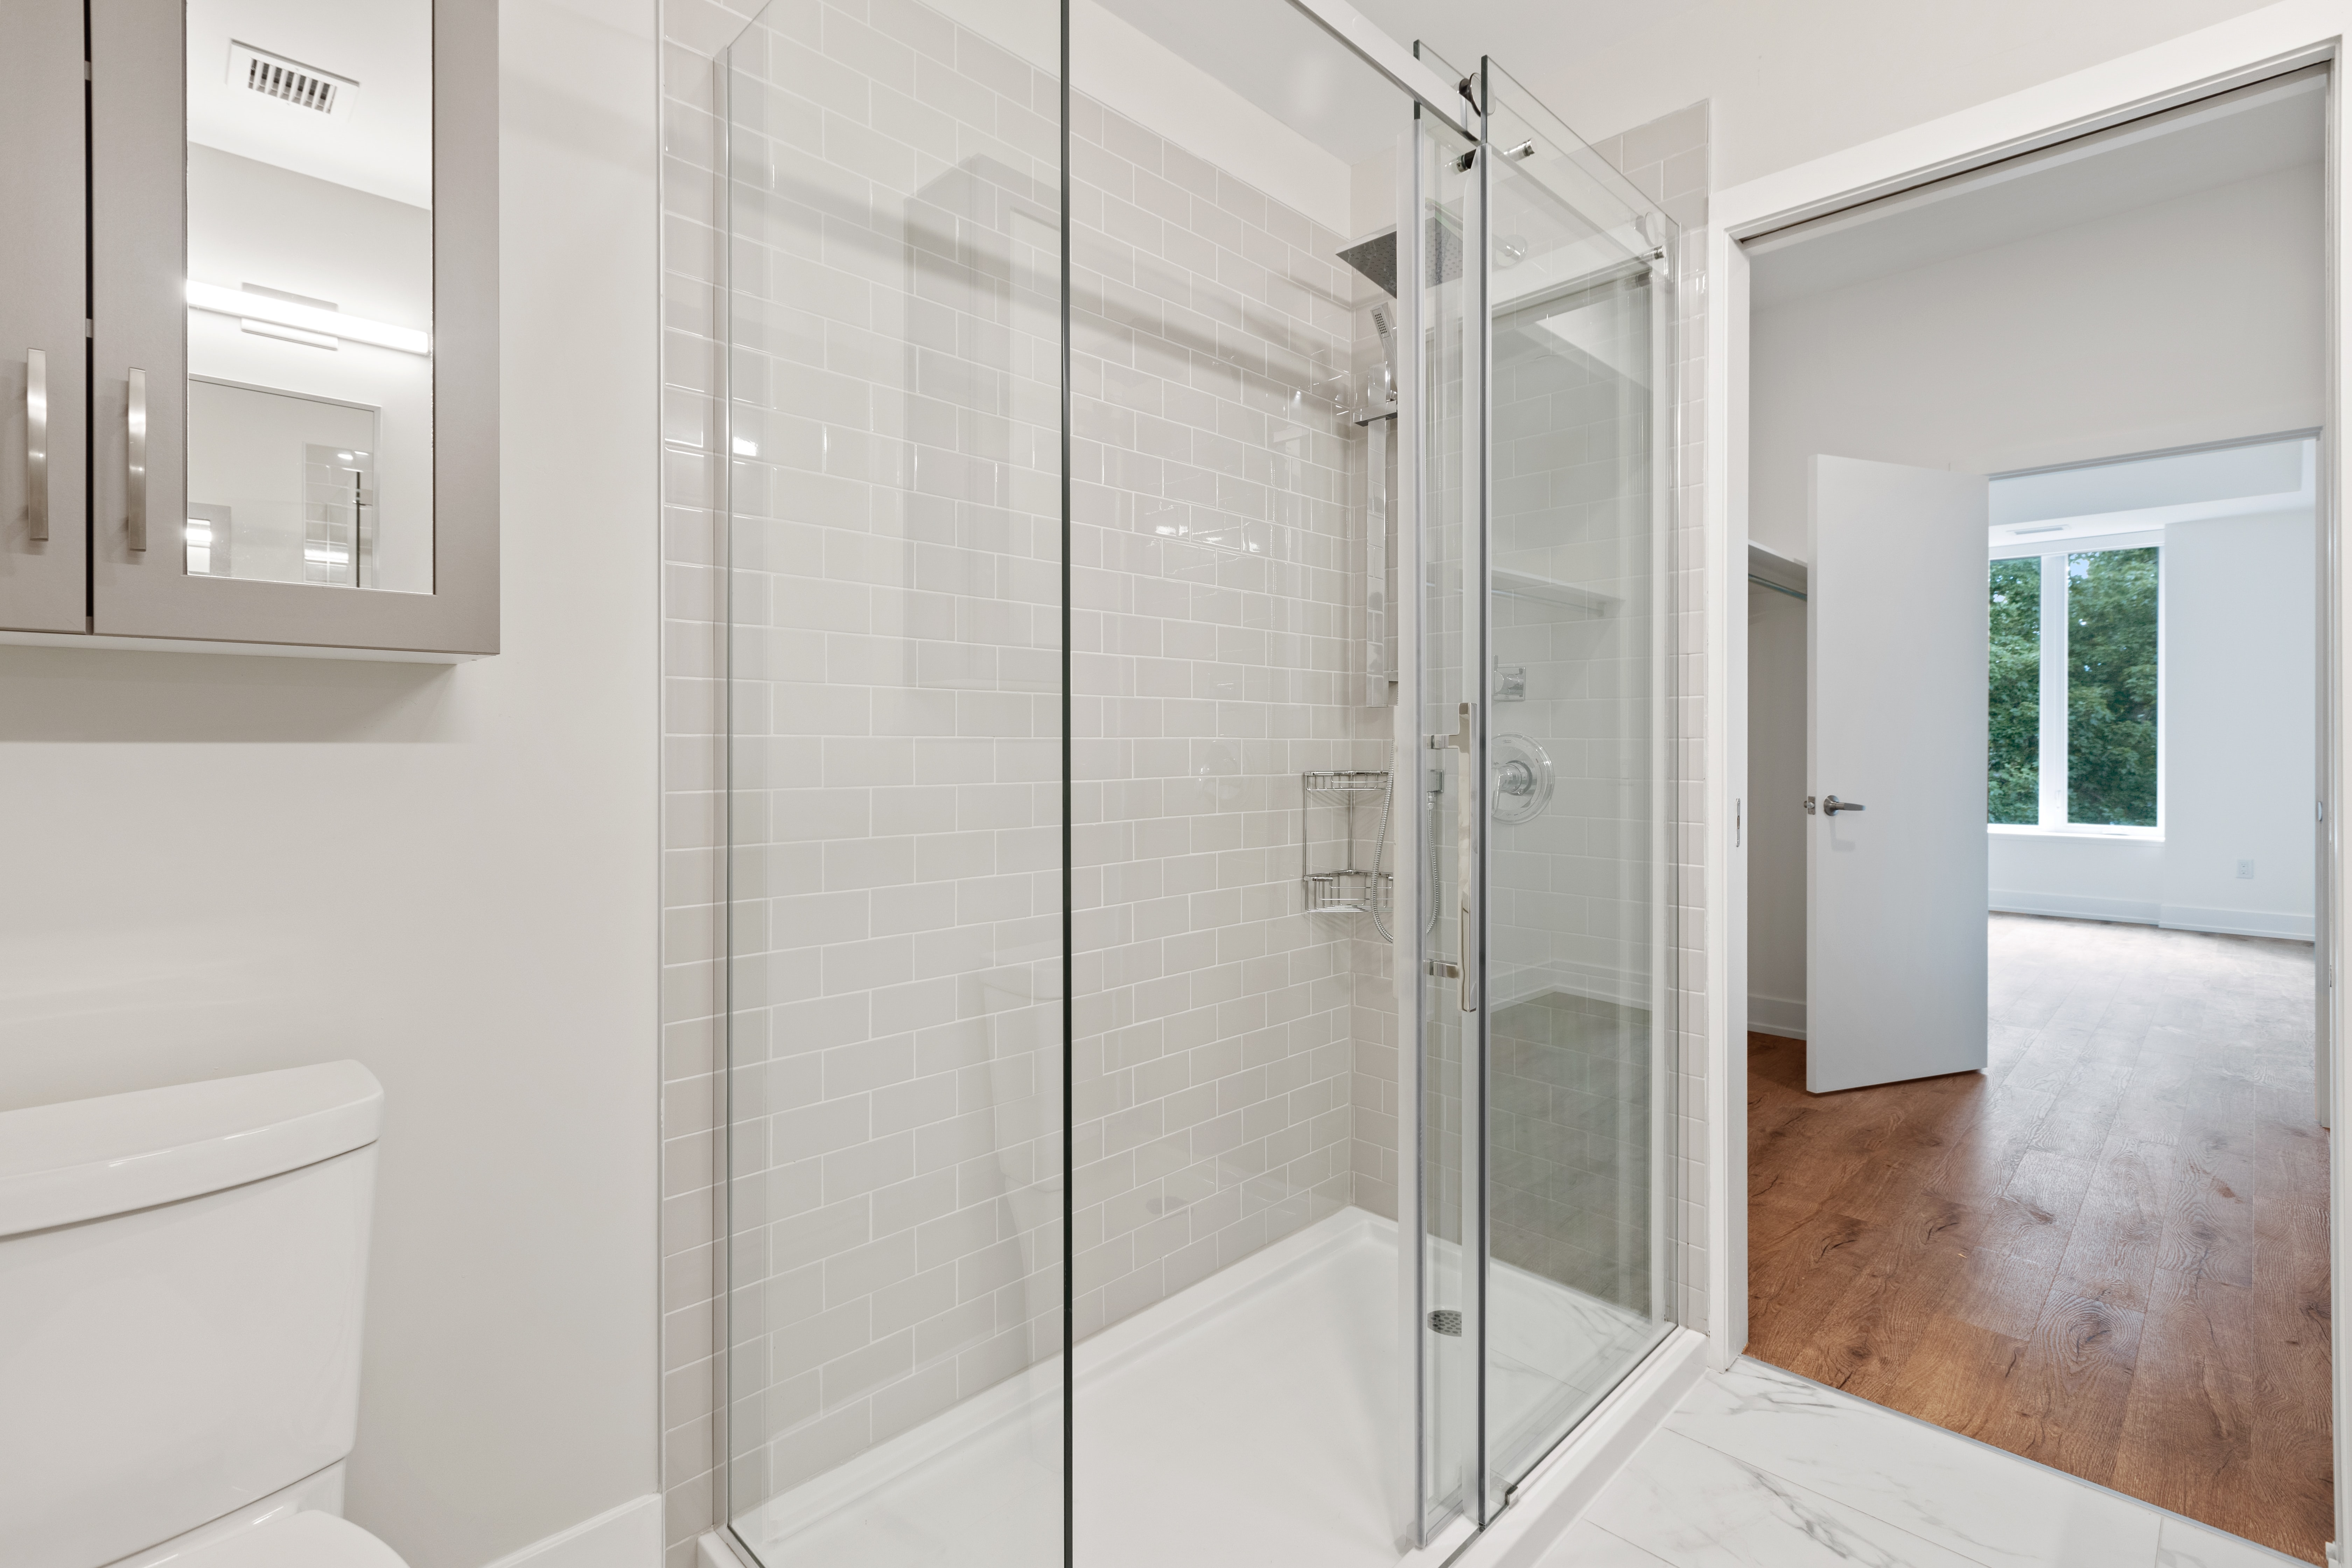 Installing shower doors | Bathroom remodeling process | Alabama Construction Pros